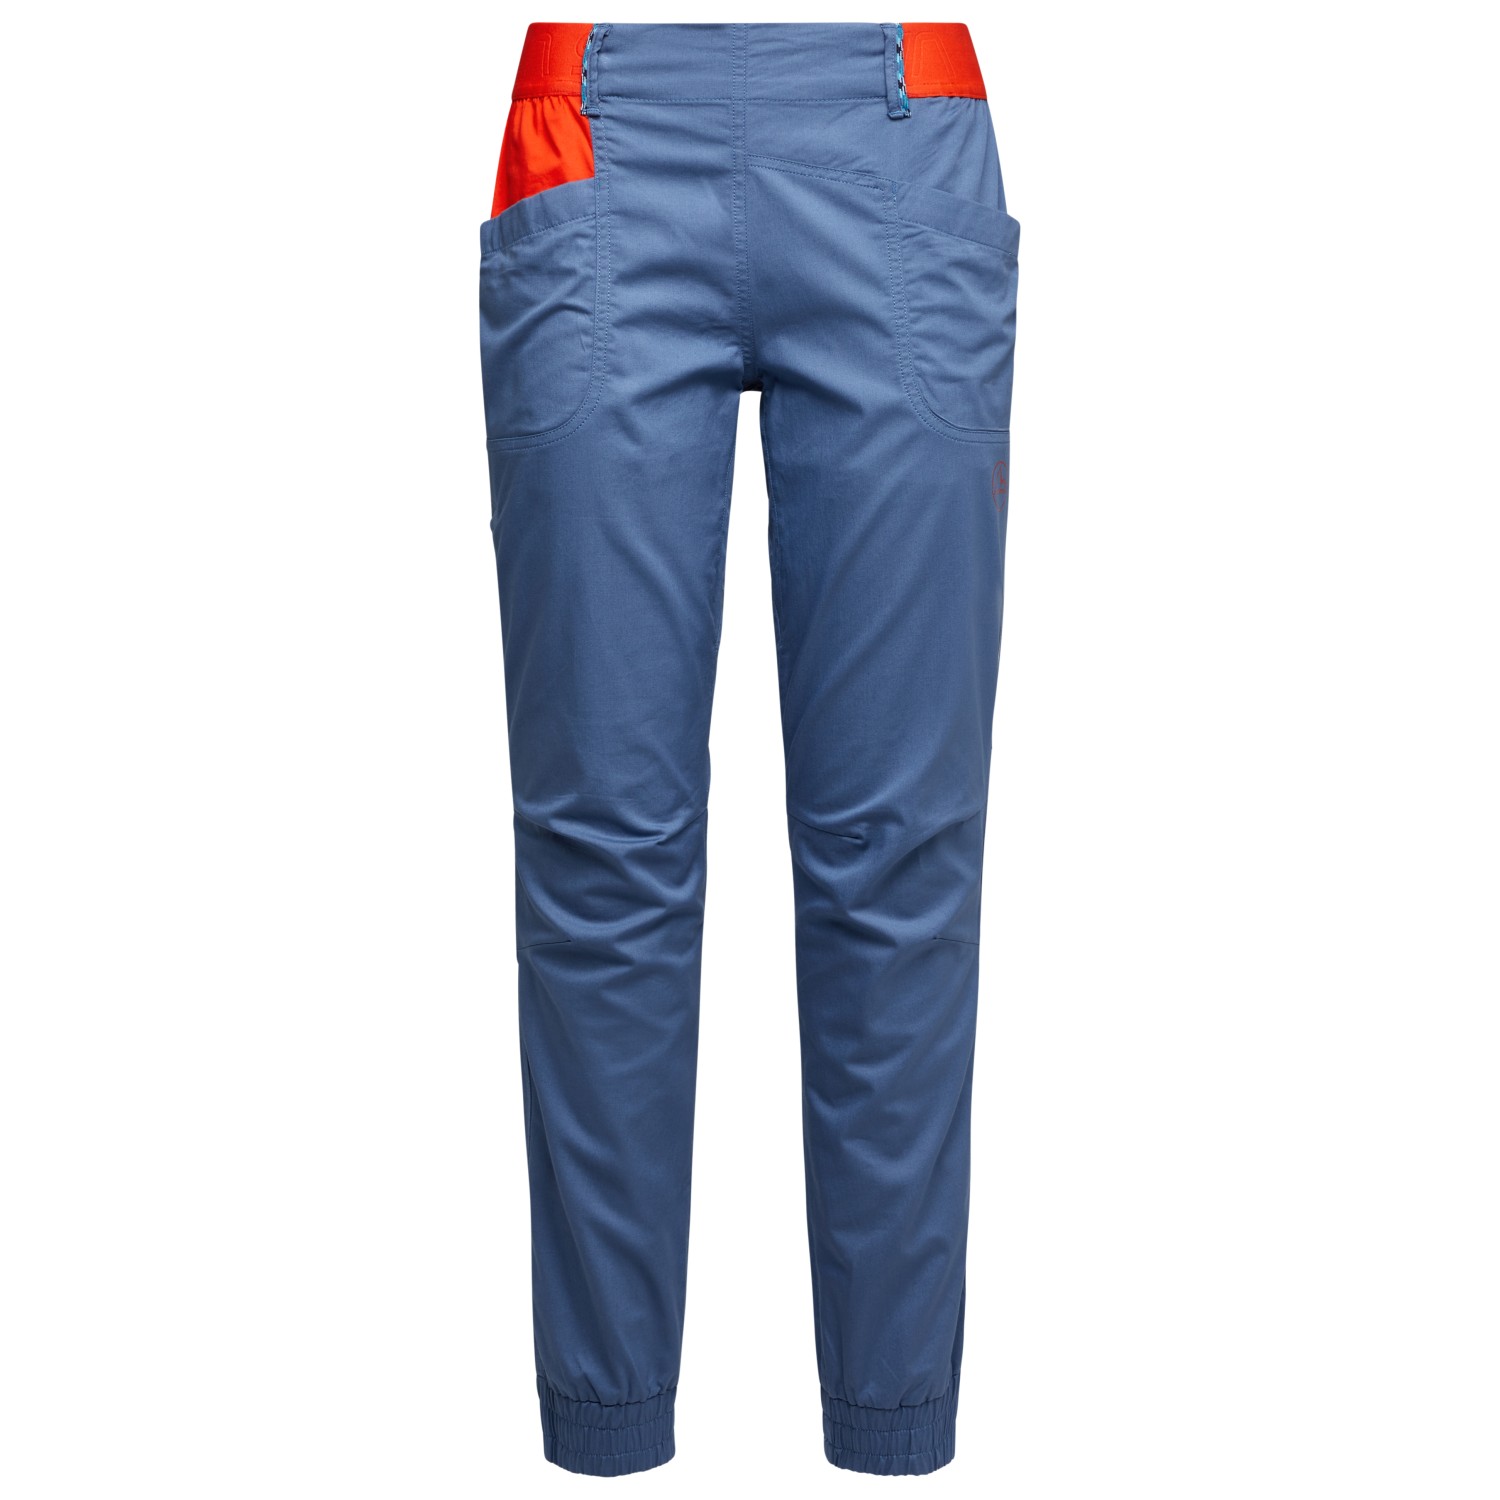 Альпинистские штаны La Sportiva Women's Tundra Pant, цвет Moonlight/Cherry Tomato